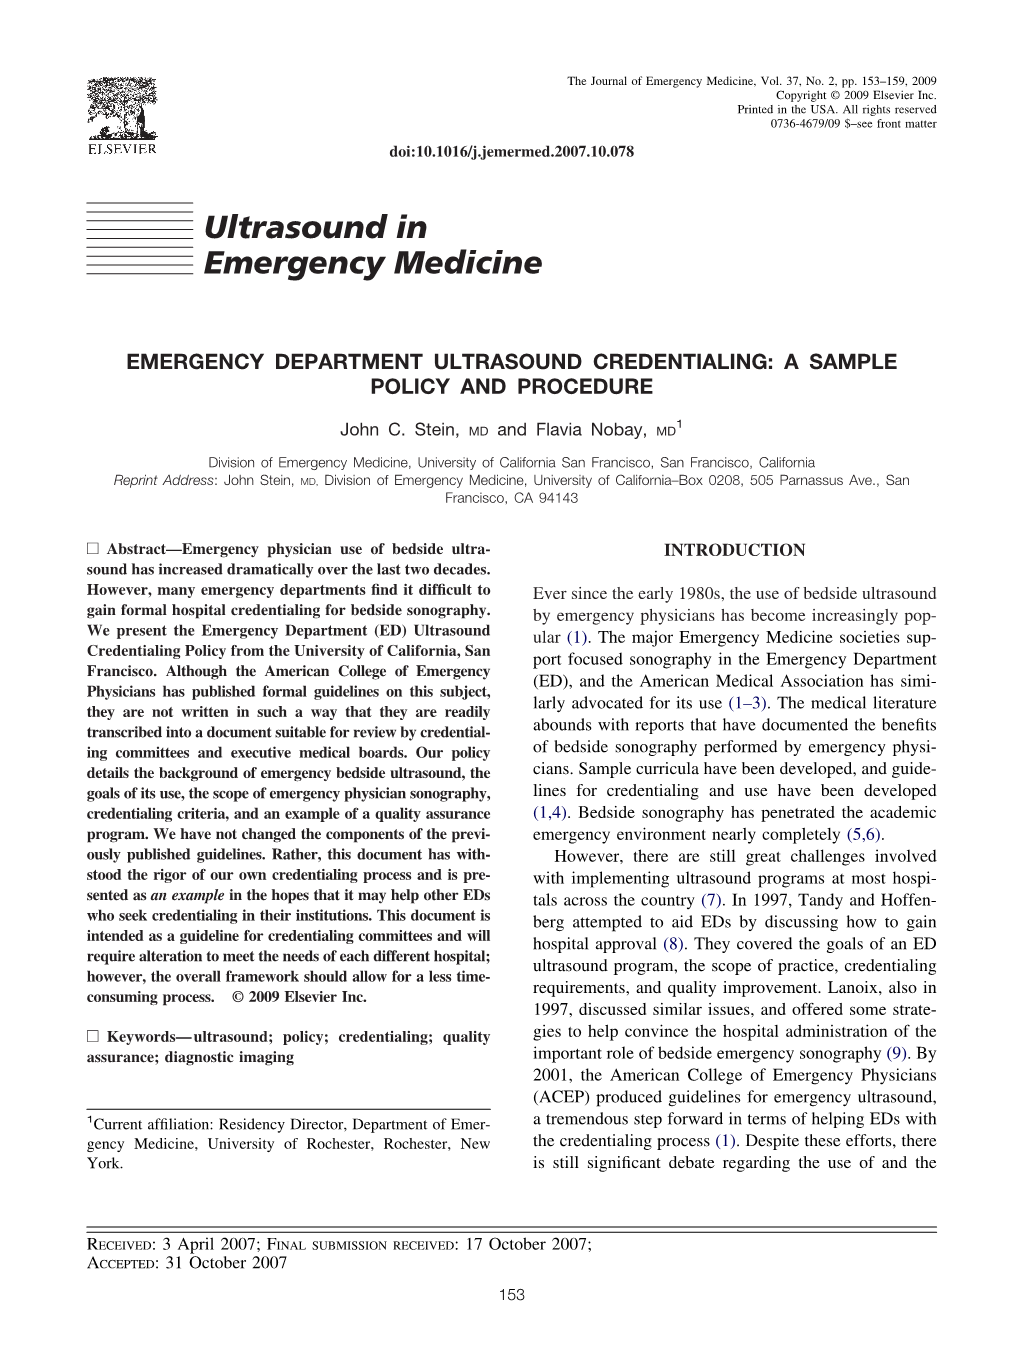 Ultrasound in Emergency Medicine